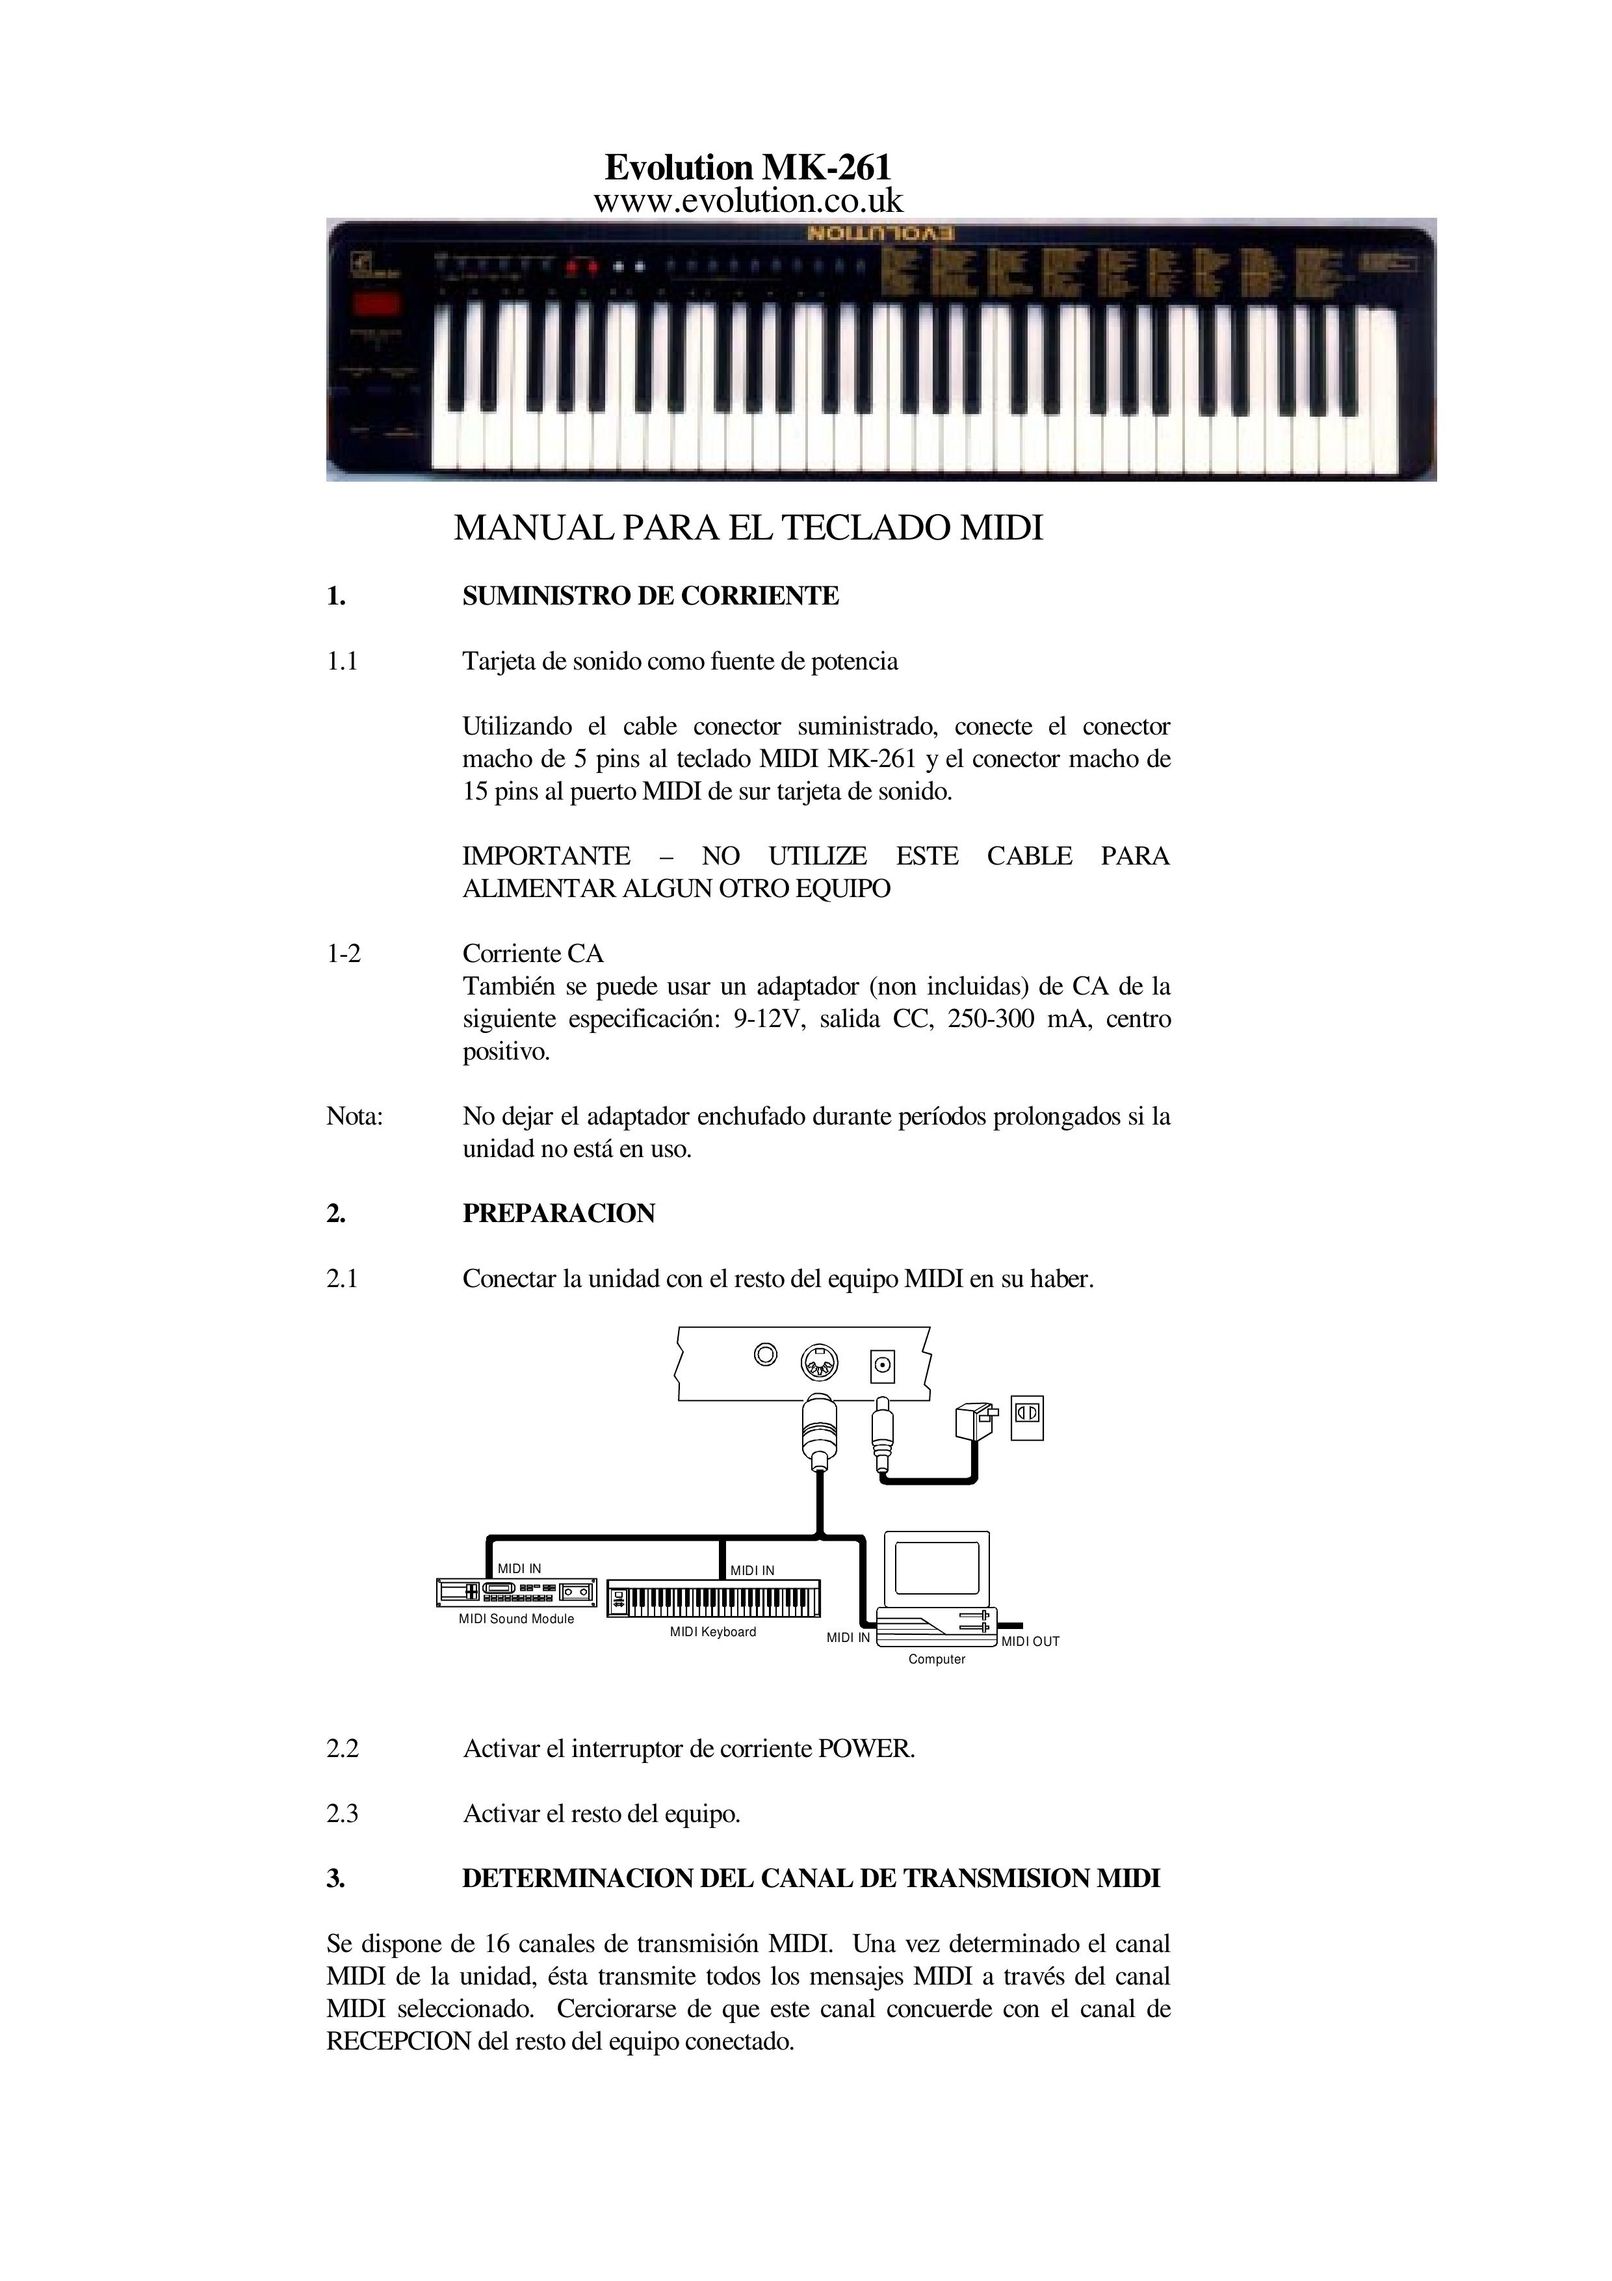 Evolution Technologies MK-261 Musical Toy Instrument User Manual